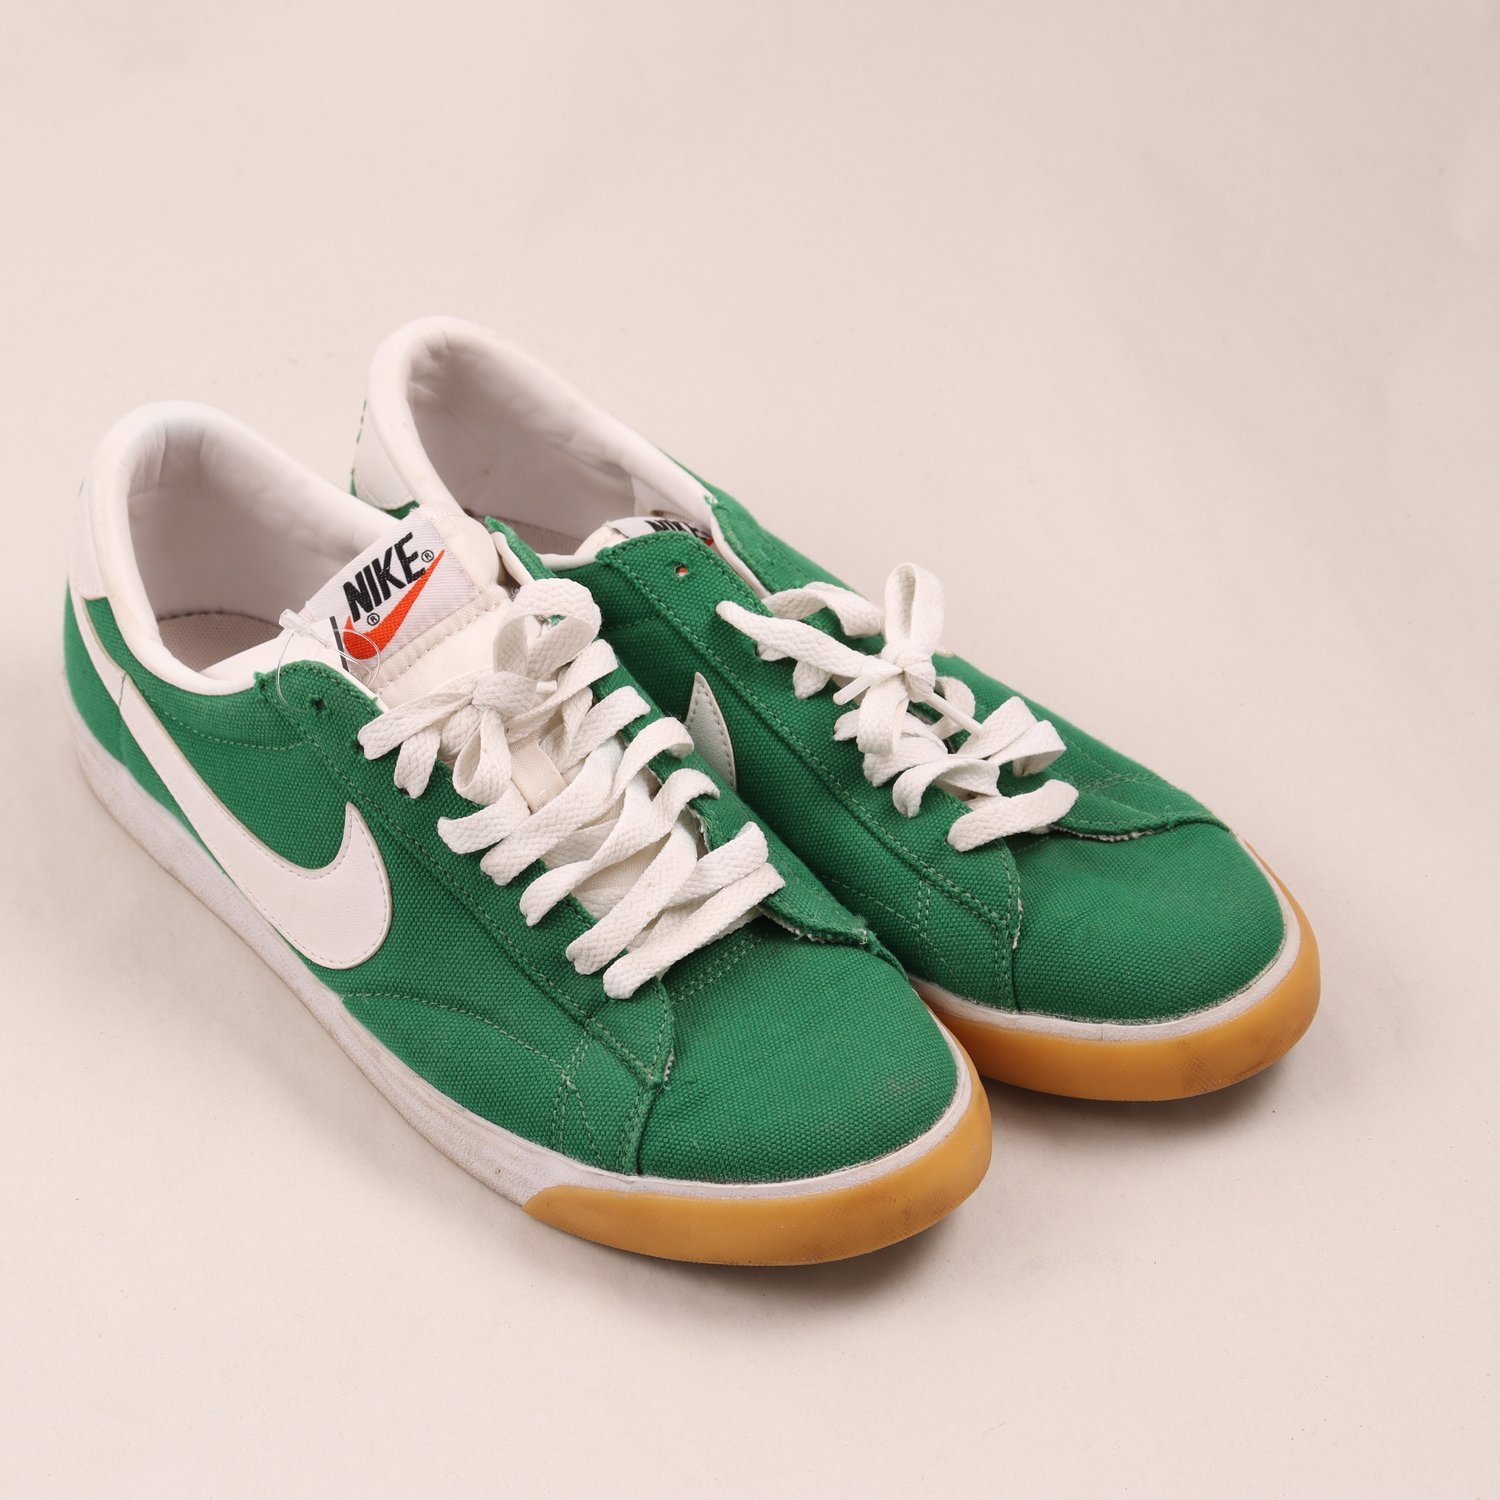 Sneakers, Nike, grön, stl. 42.5